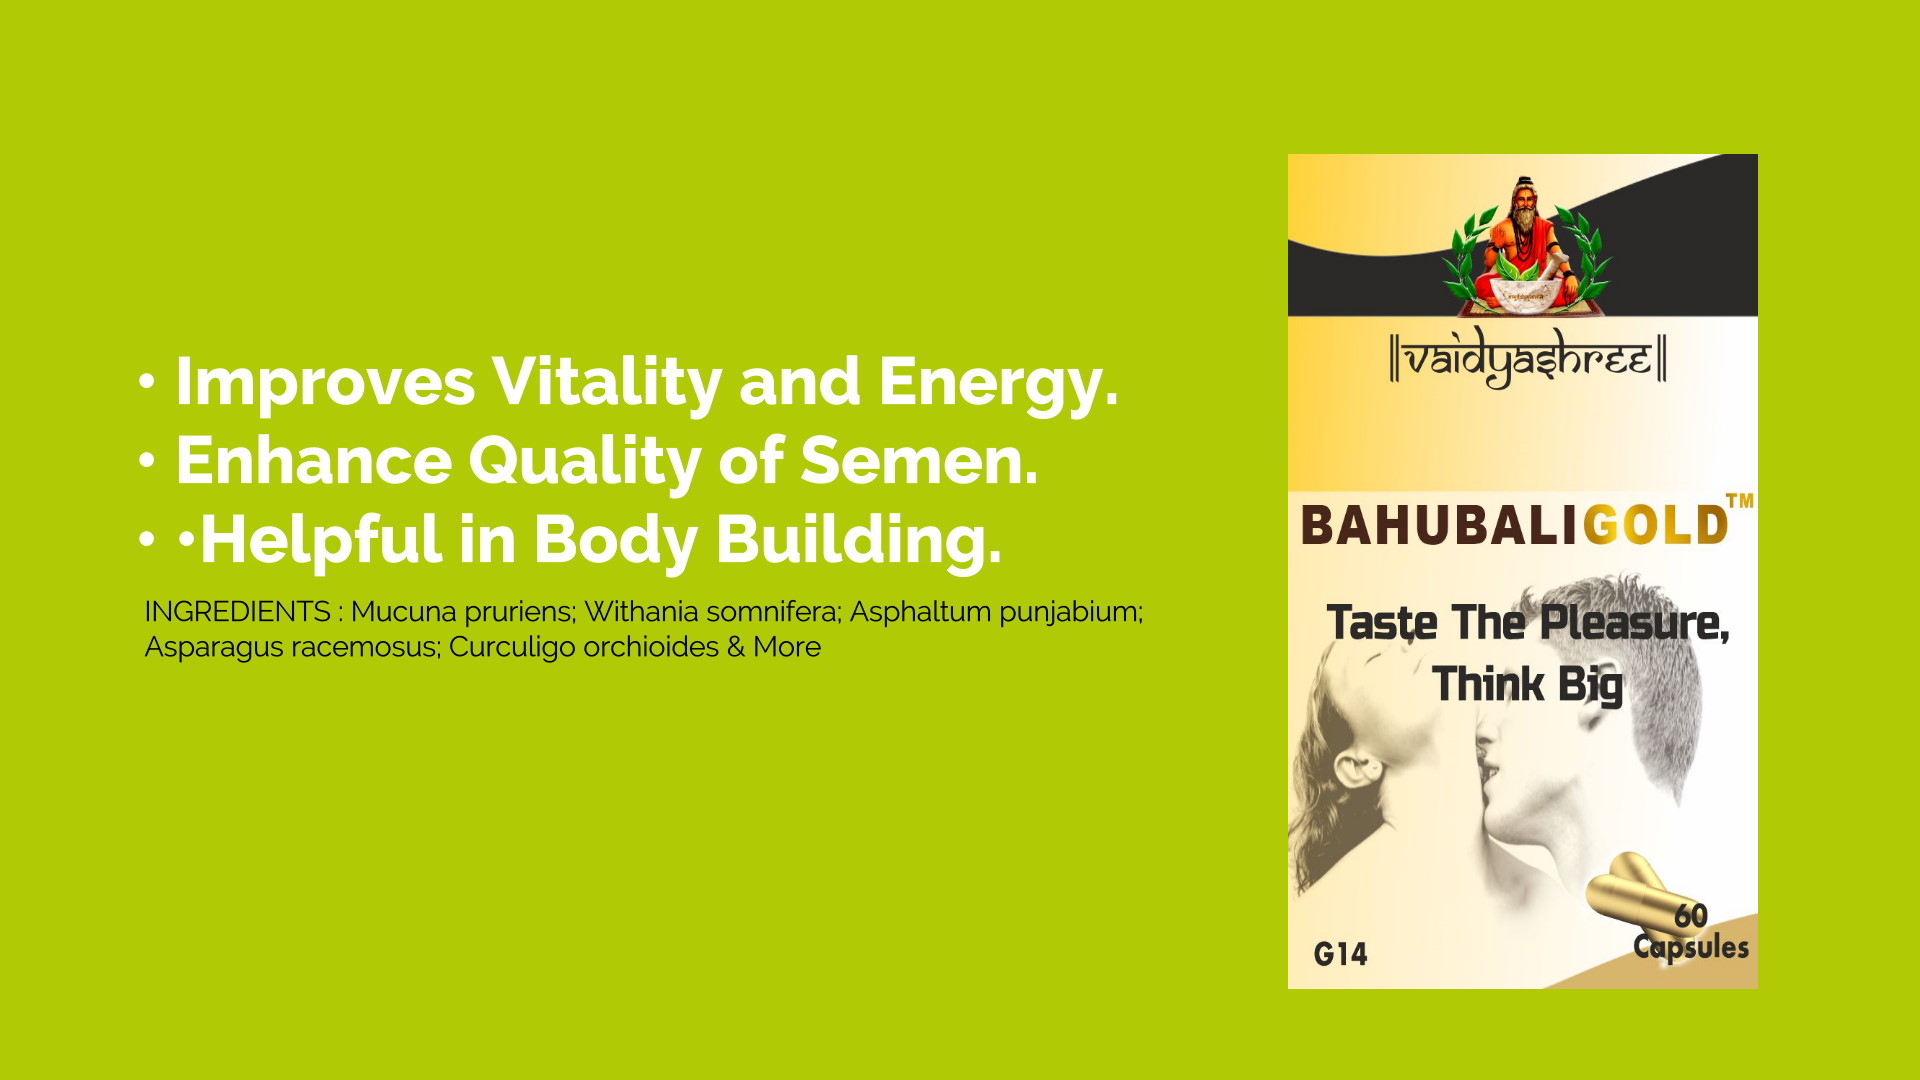 Vaidyashree's Bahubali Gold Capsules | Improves Vitality and Energy